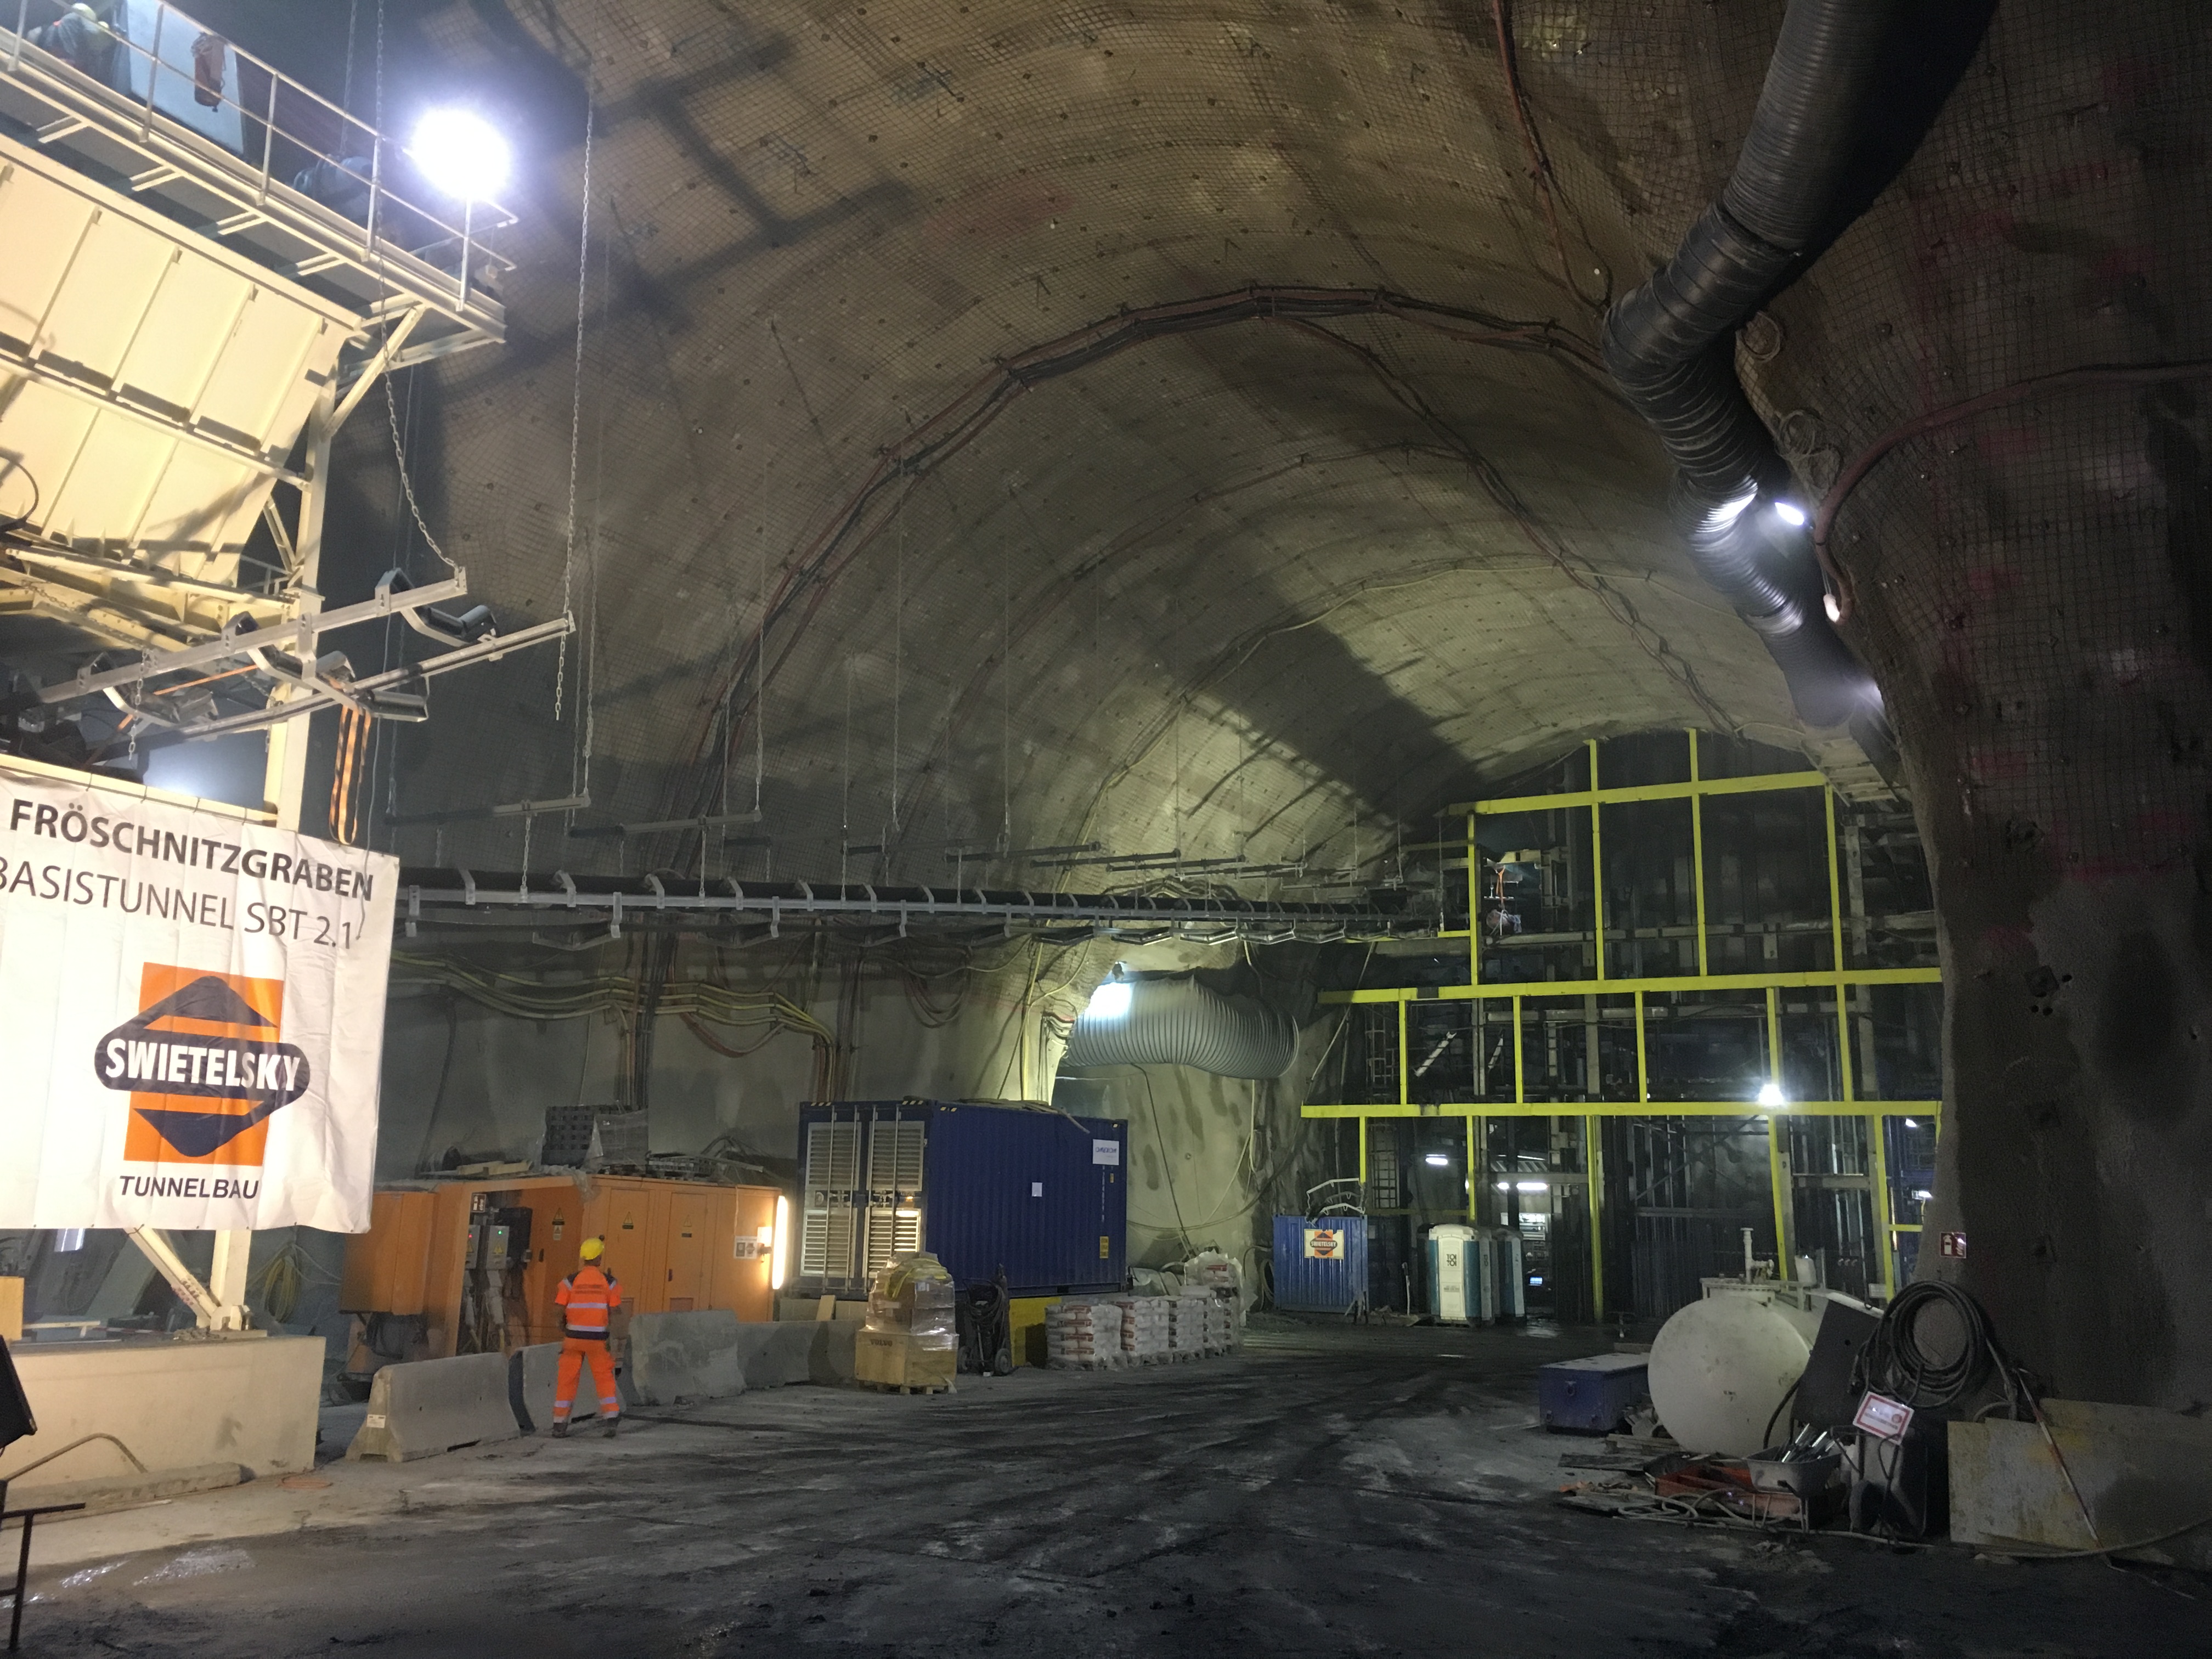 Semmering Basistunnel - SBT 2.1 Fröschnitzgraben - Tunnelarbejde